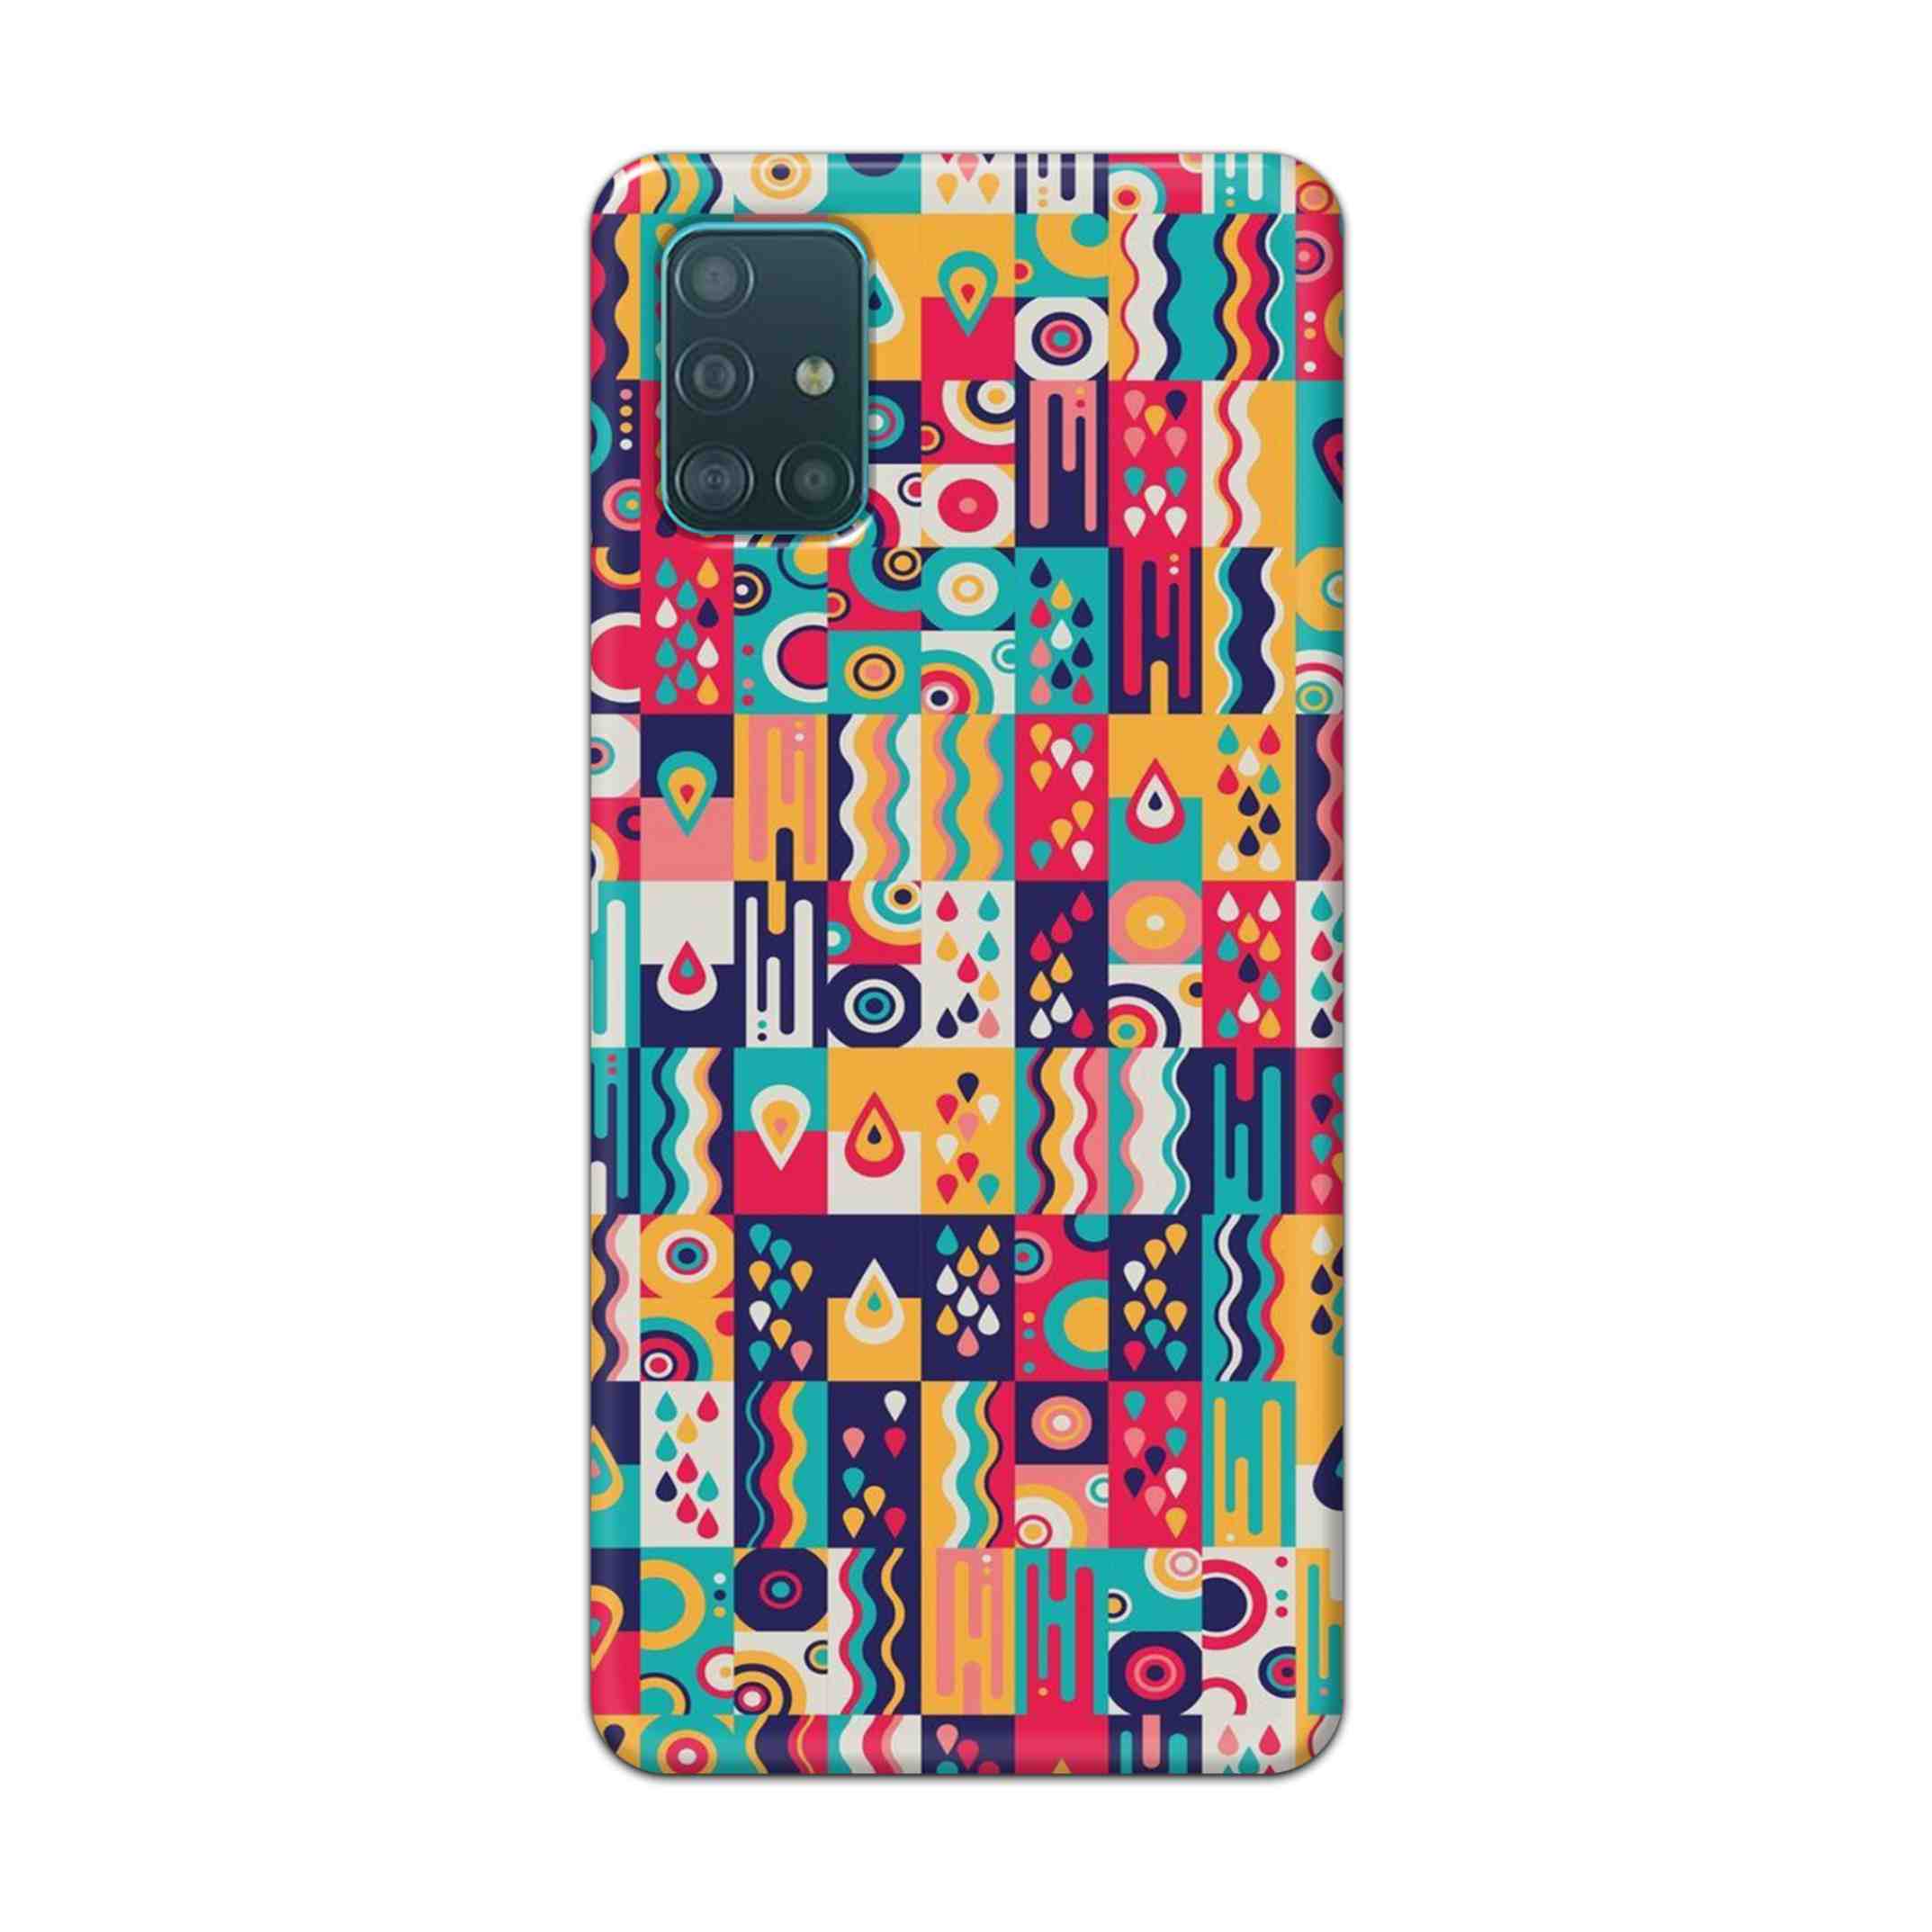 Buy Art Hard Back Mobile Phone Case Cover For Samsung A51 Online